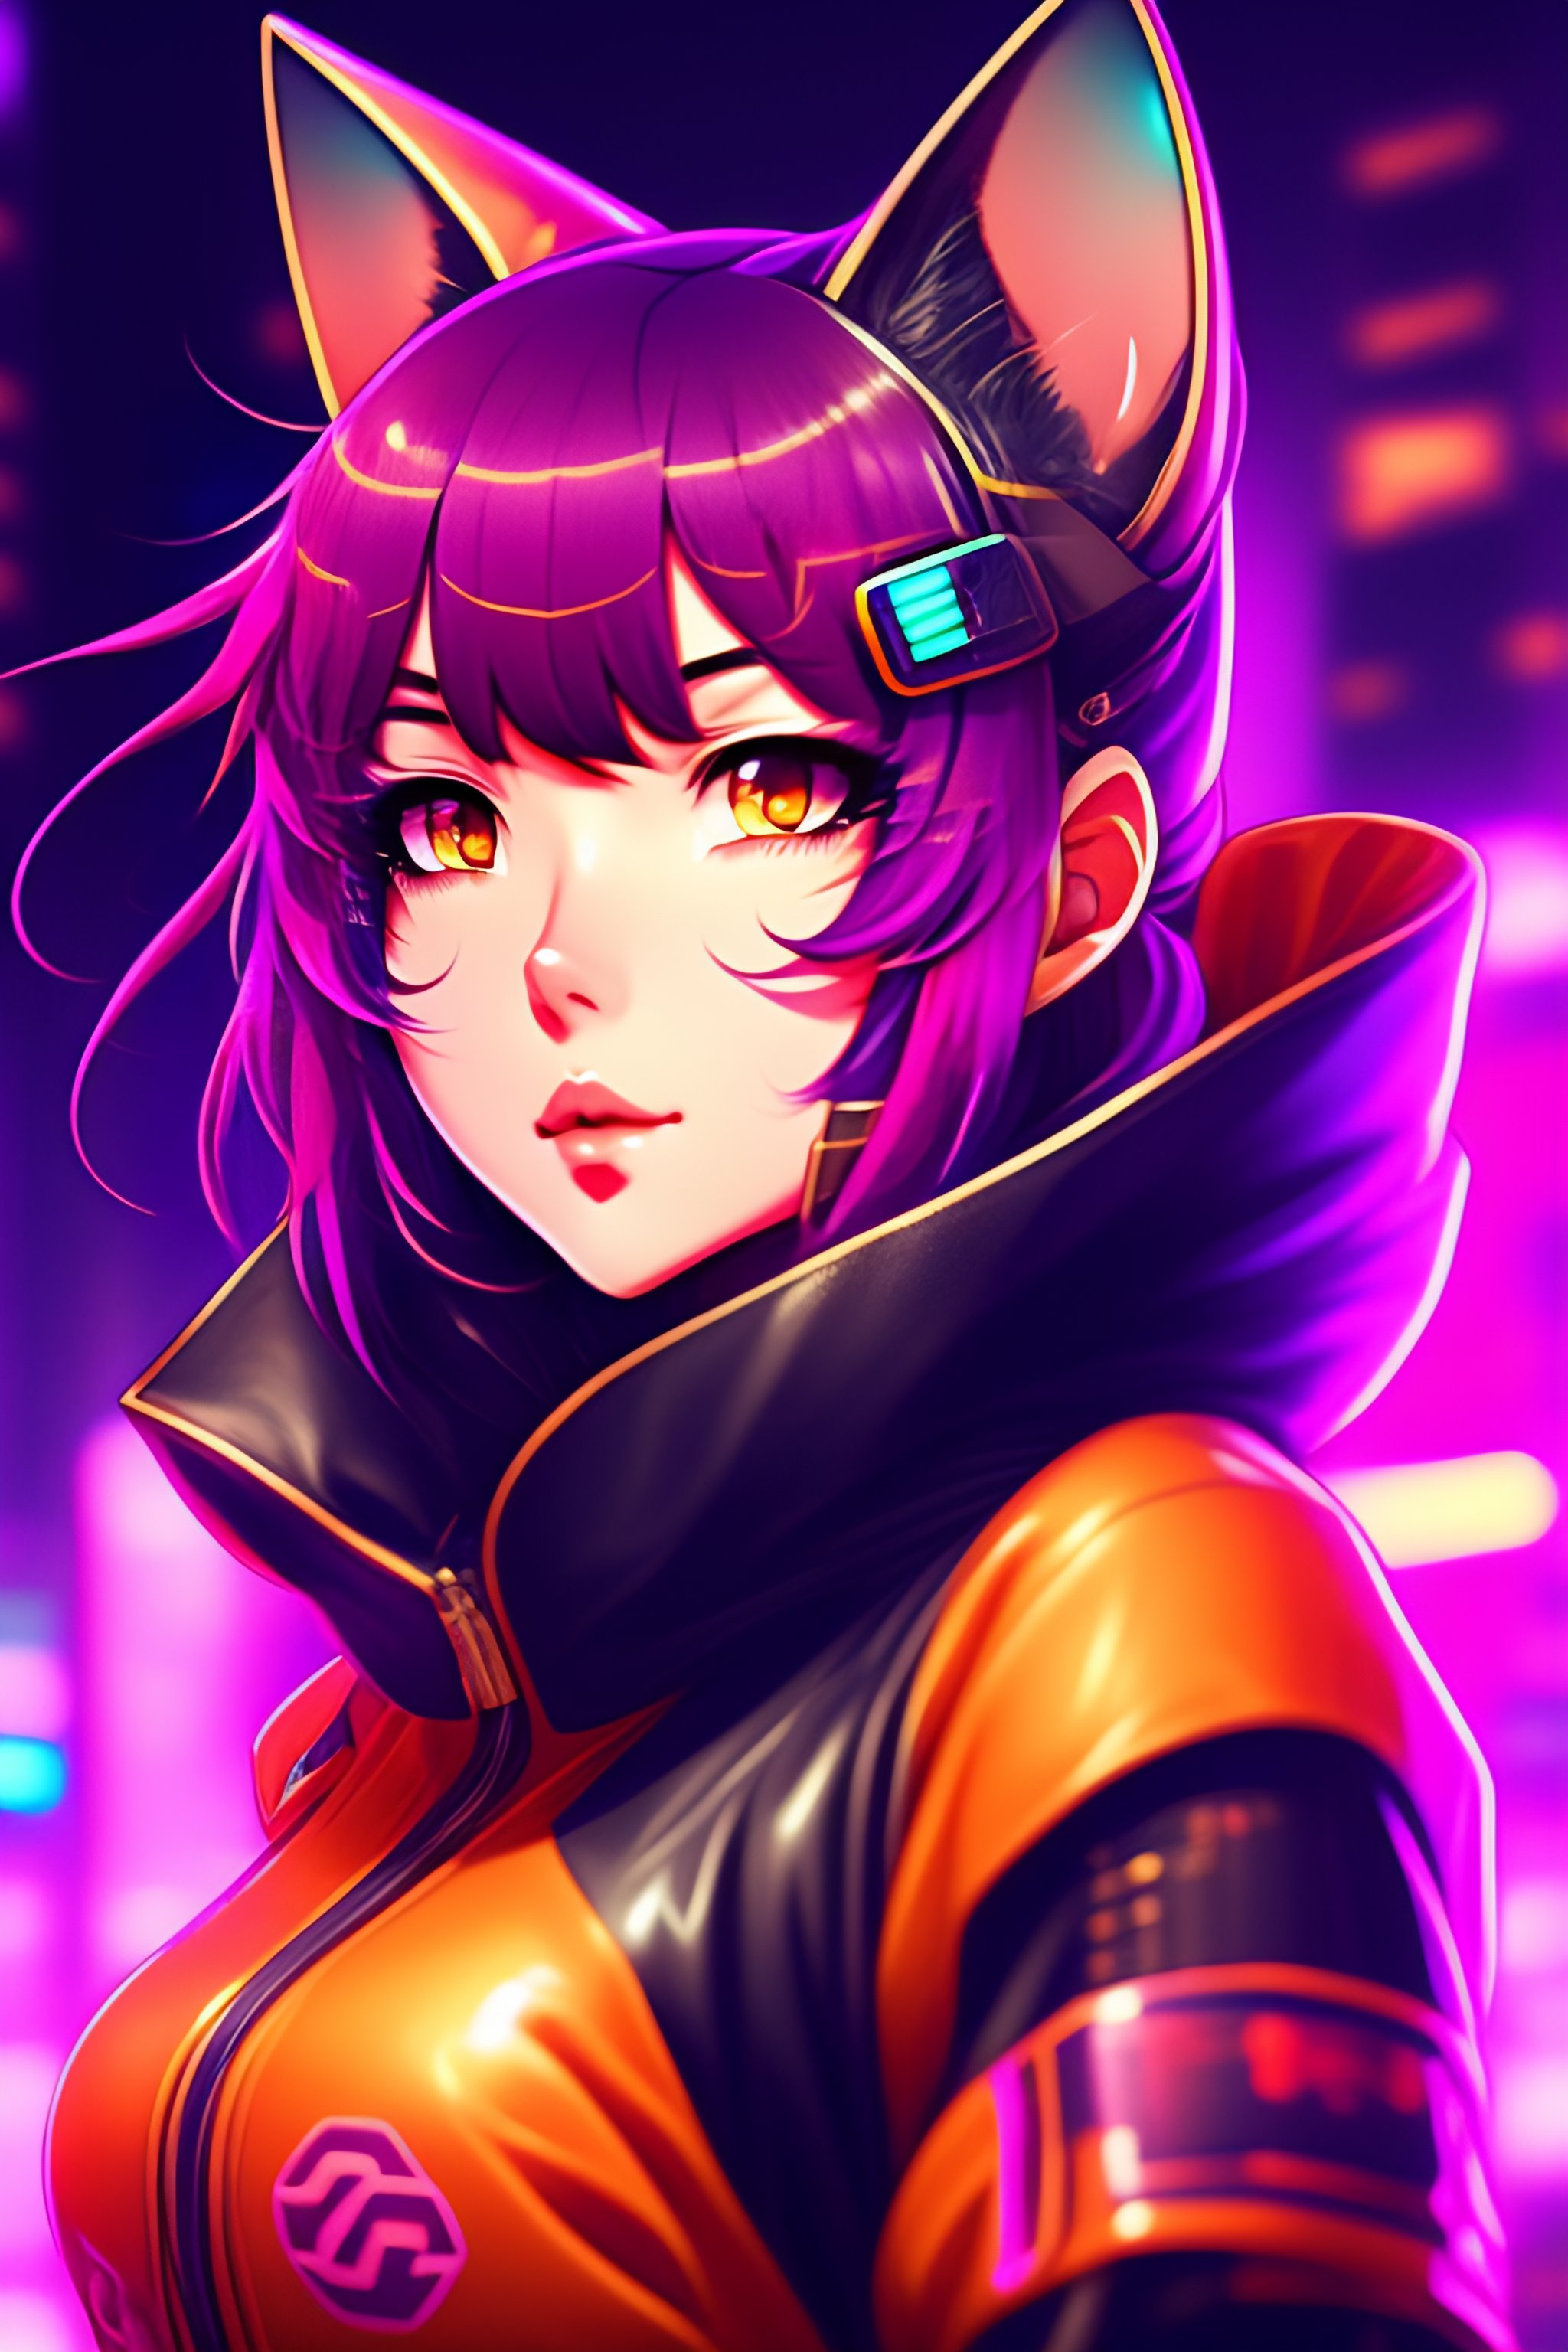 Lexica - Portrait of a Cute Anime Cyber Ninja Cat Girl in a Retro ...